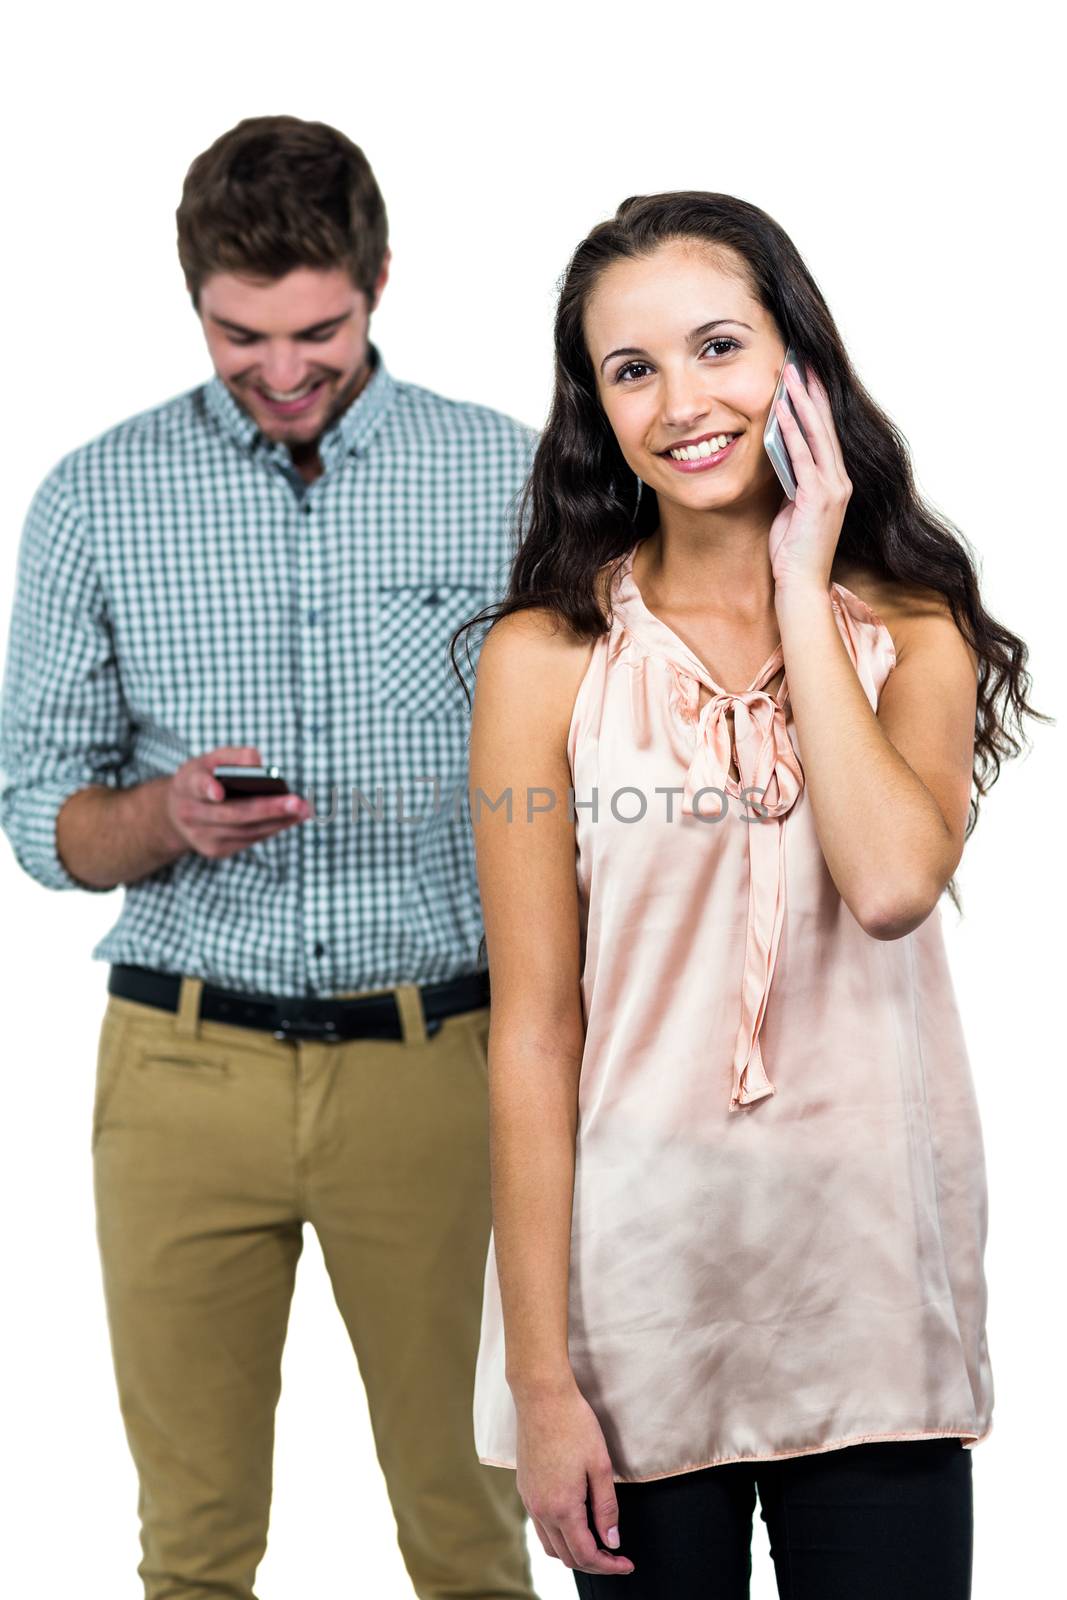 Smiling couple using smartphones by Wavebreakmedia